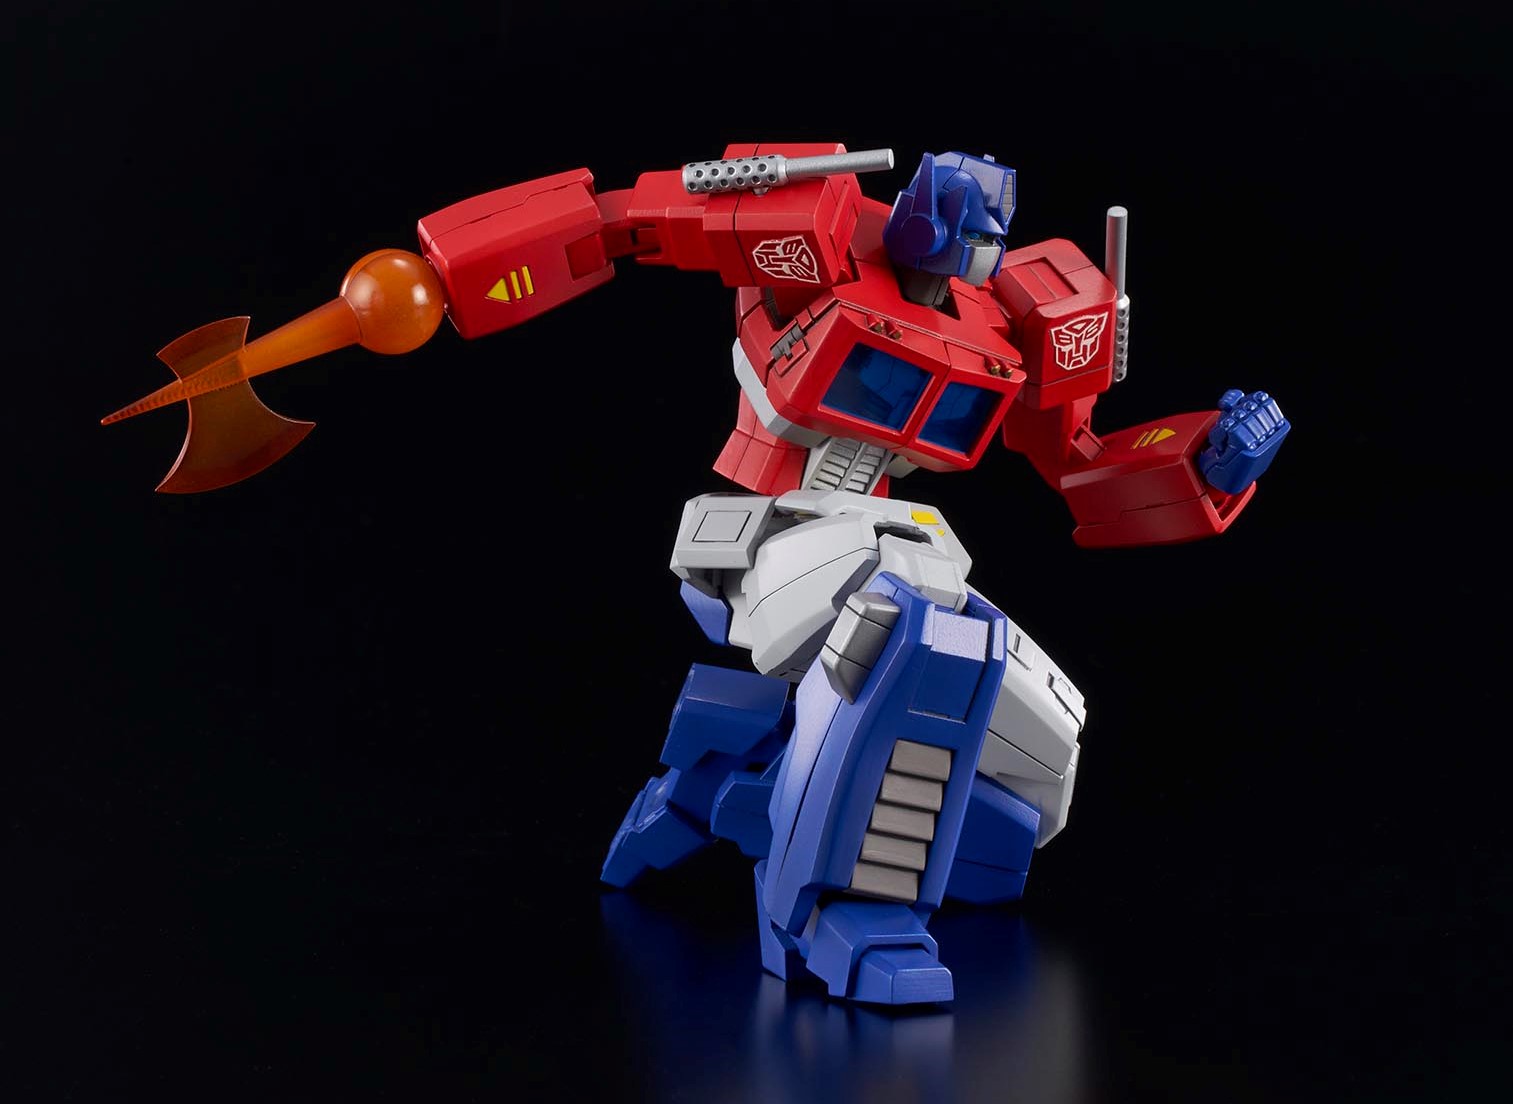 Transformers Nemesis Prime Attack Mode Exclusive Furai Model Kit Flame Toys